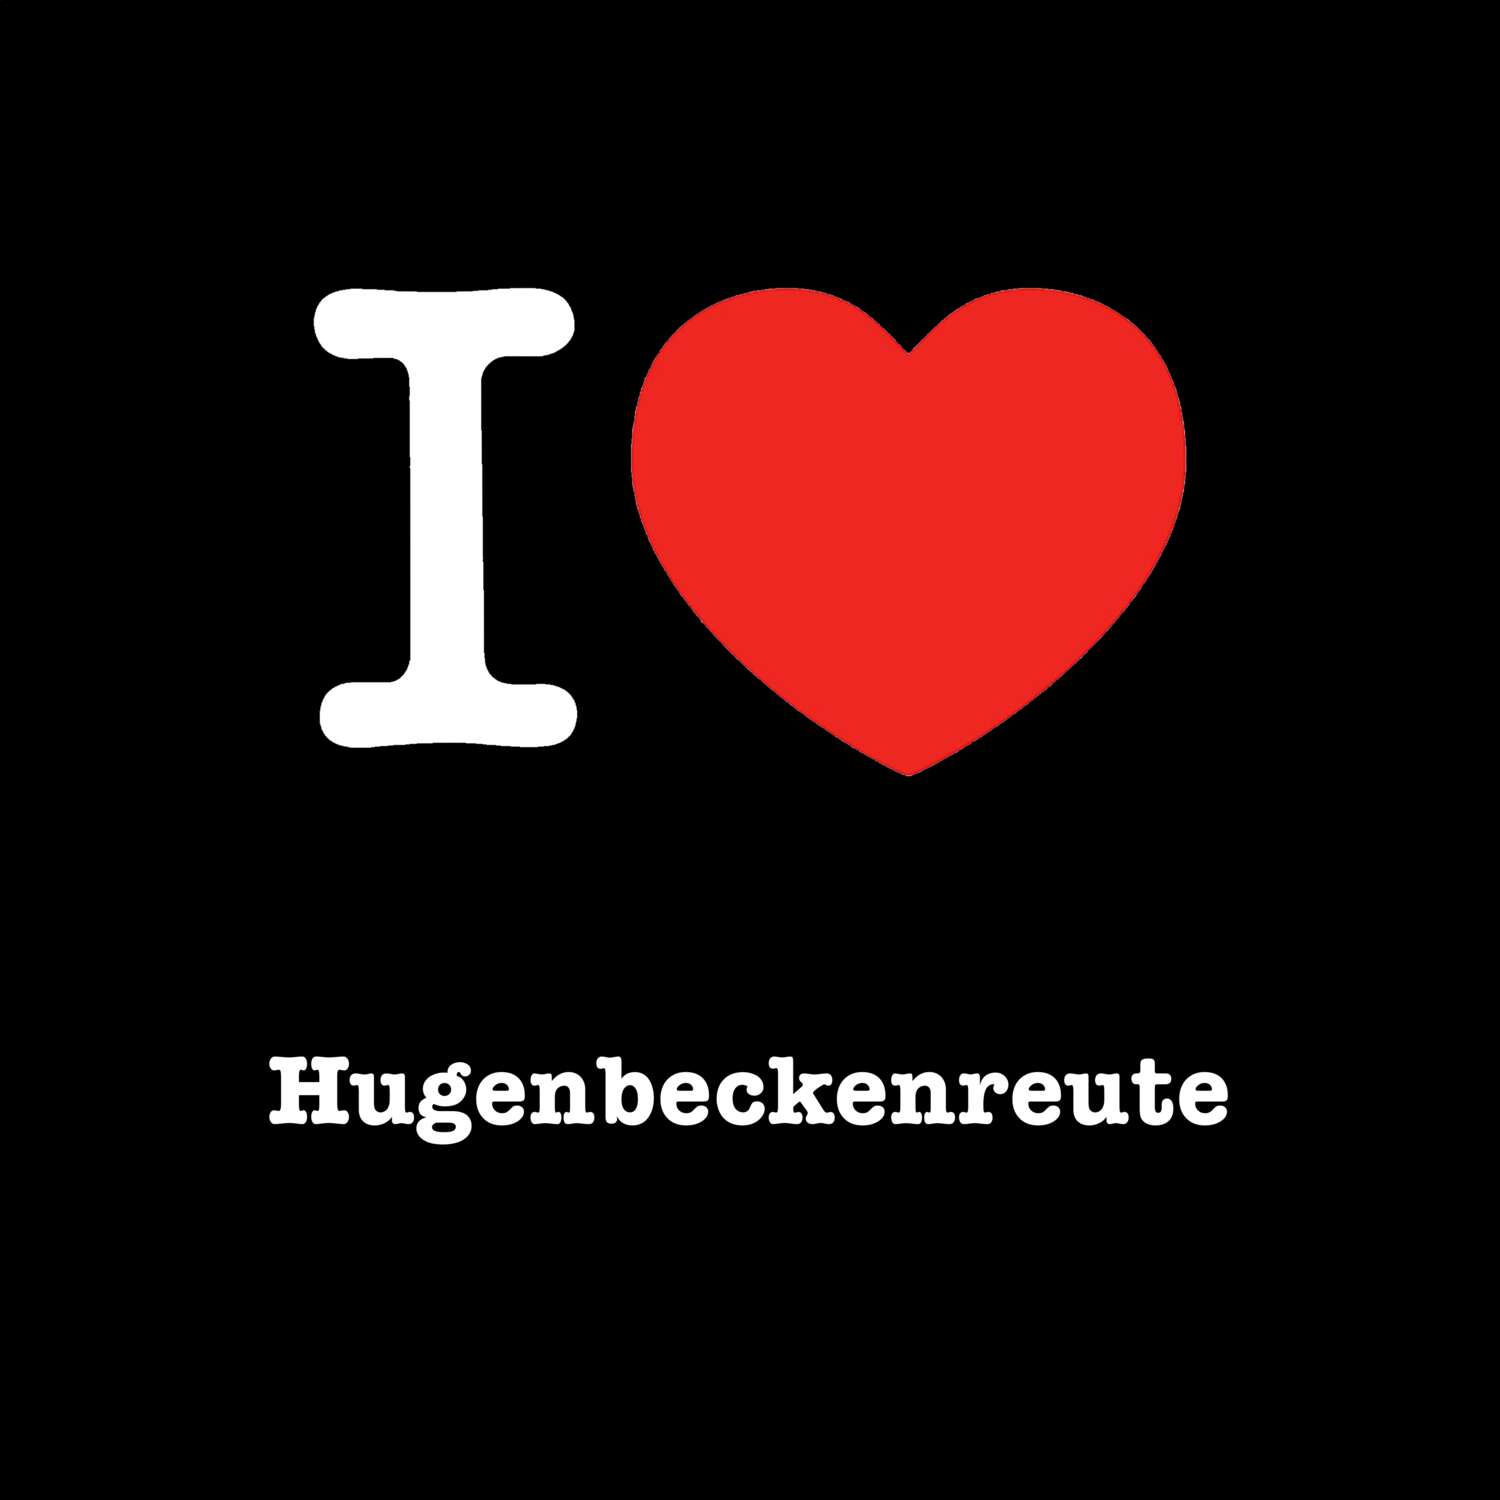 Hugenbeckenreute T-Shirt »I love«